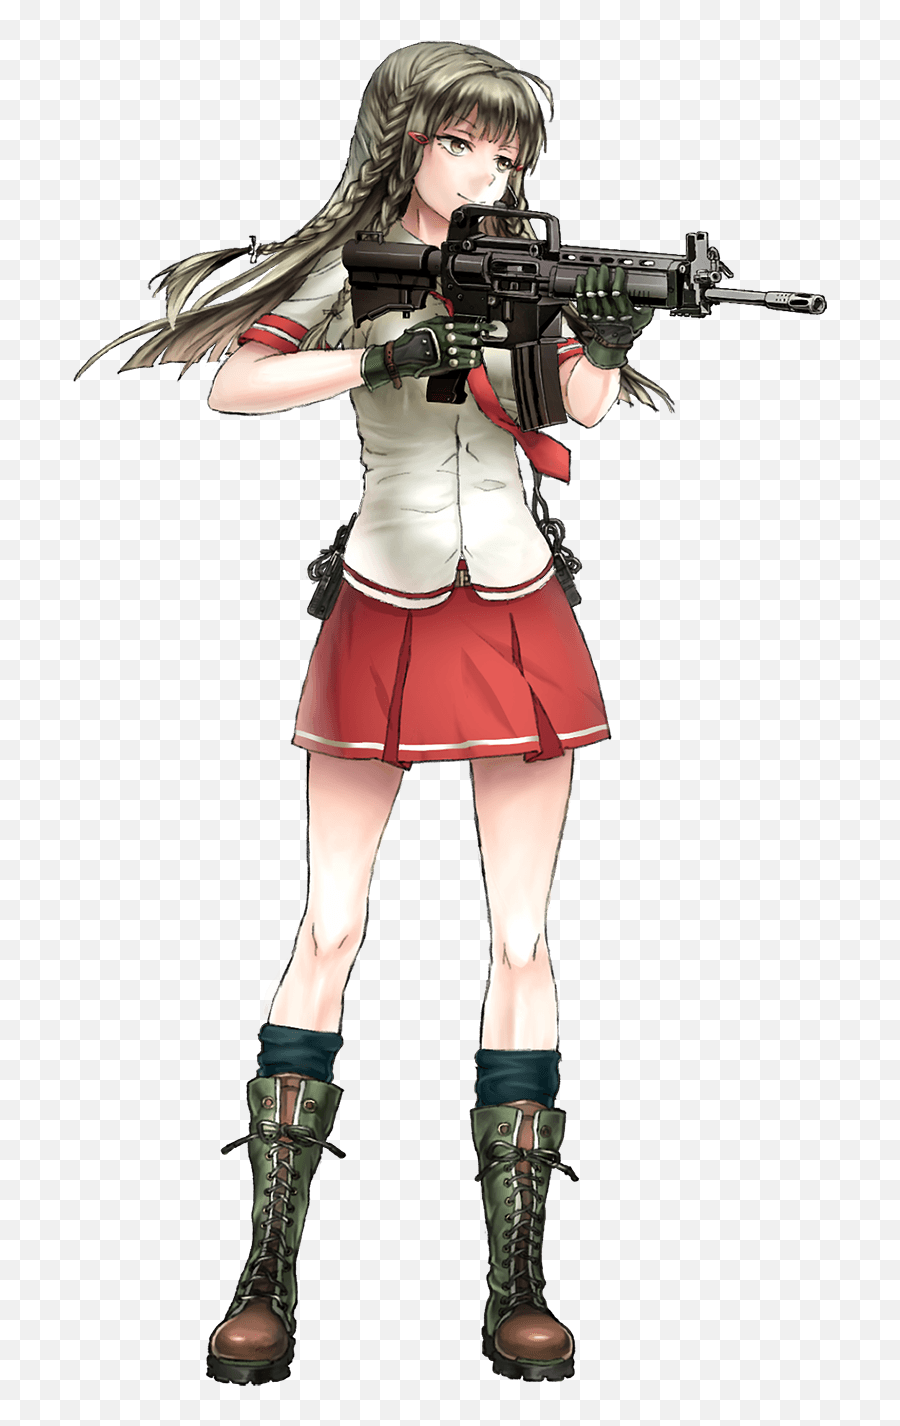 Download T91assaultriflenormal Cartoon Girl Shooting Gun Anime Girl Gun Png Free Transparent Png Images Pngaaa Com